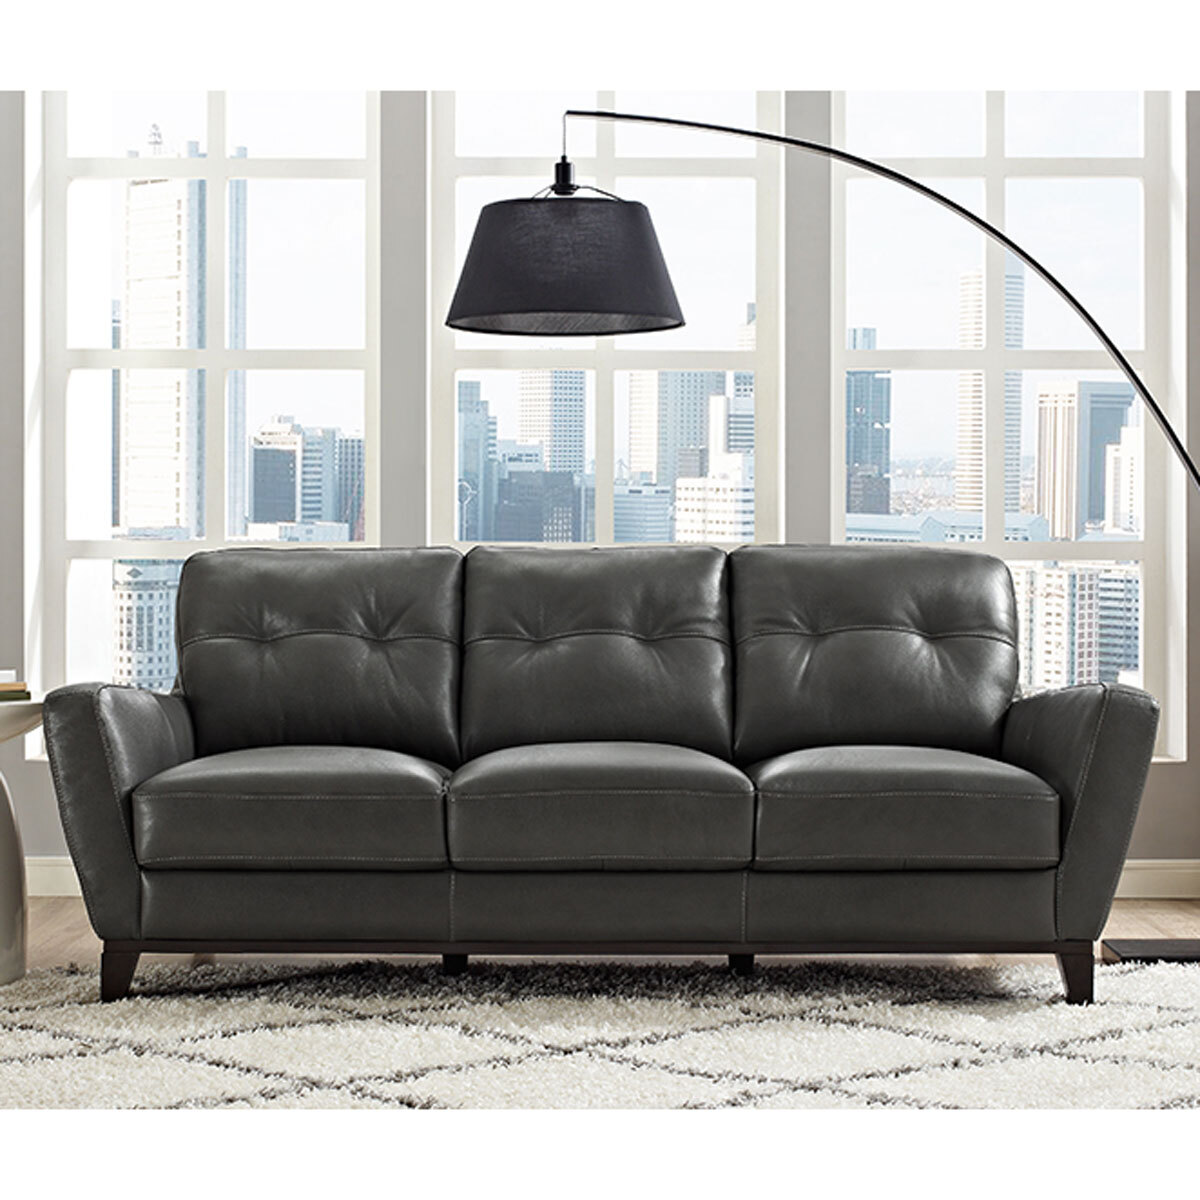 Grey Leather 3 Seater Sofa Costco Uk, Natuzzi Sectional Leather